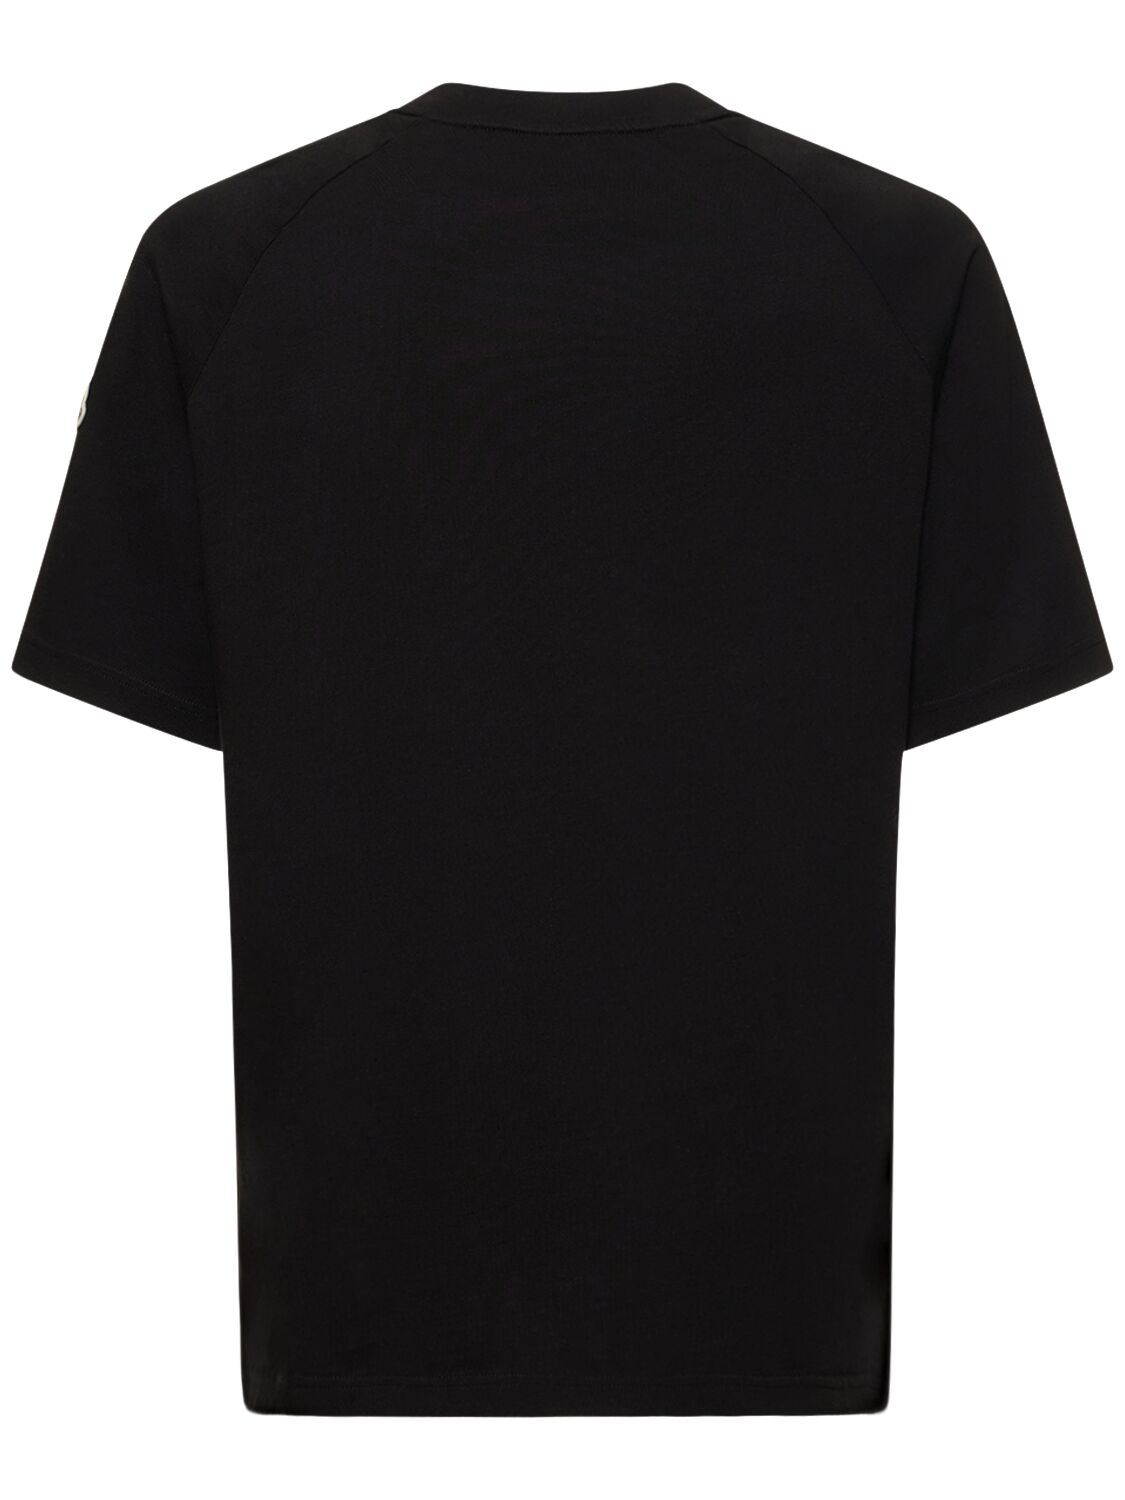 Moncler Logo-Appliquéd Printed Cotton-jersey T-Shirt - Men - Black T-shirts - M